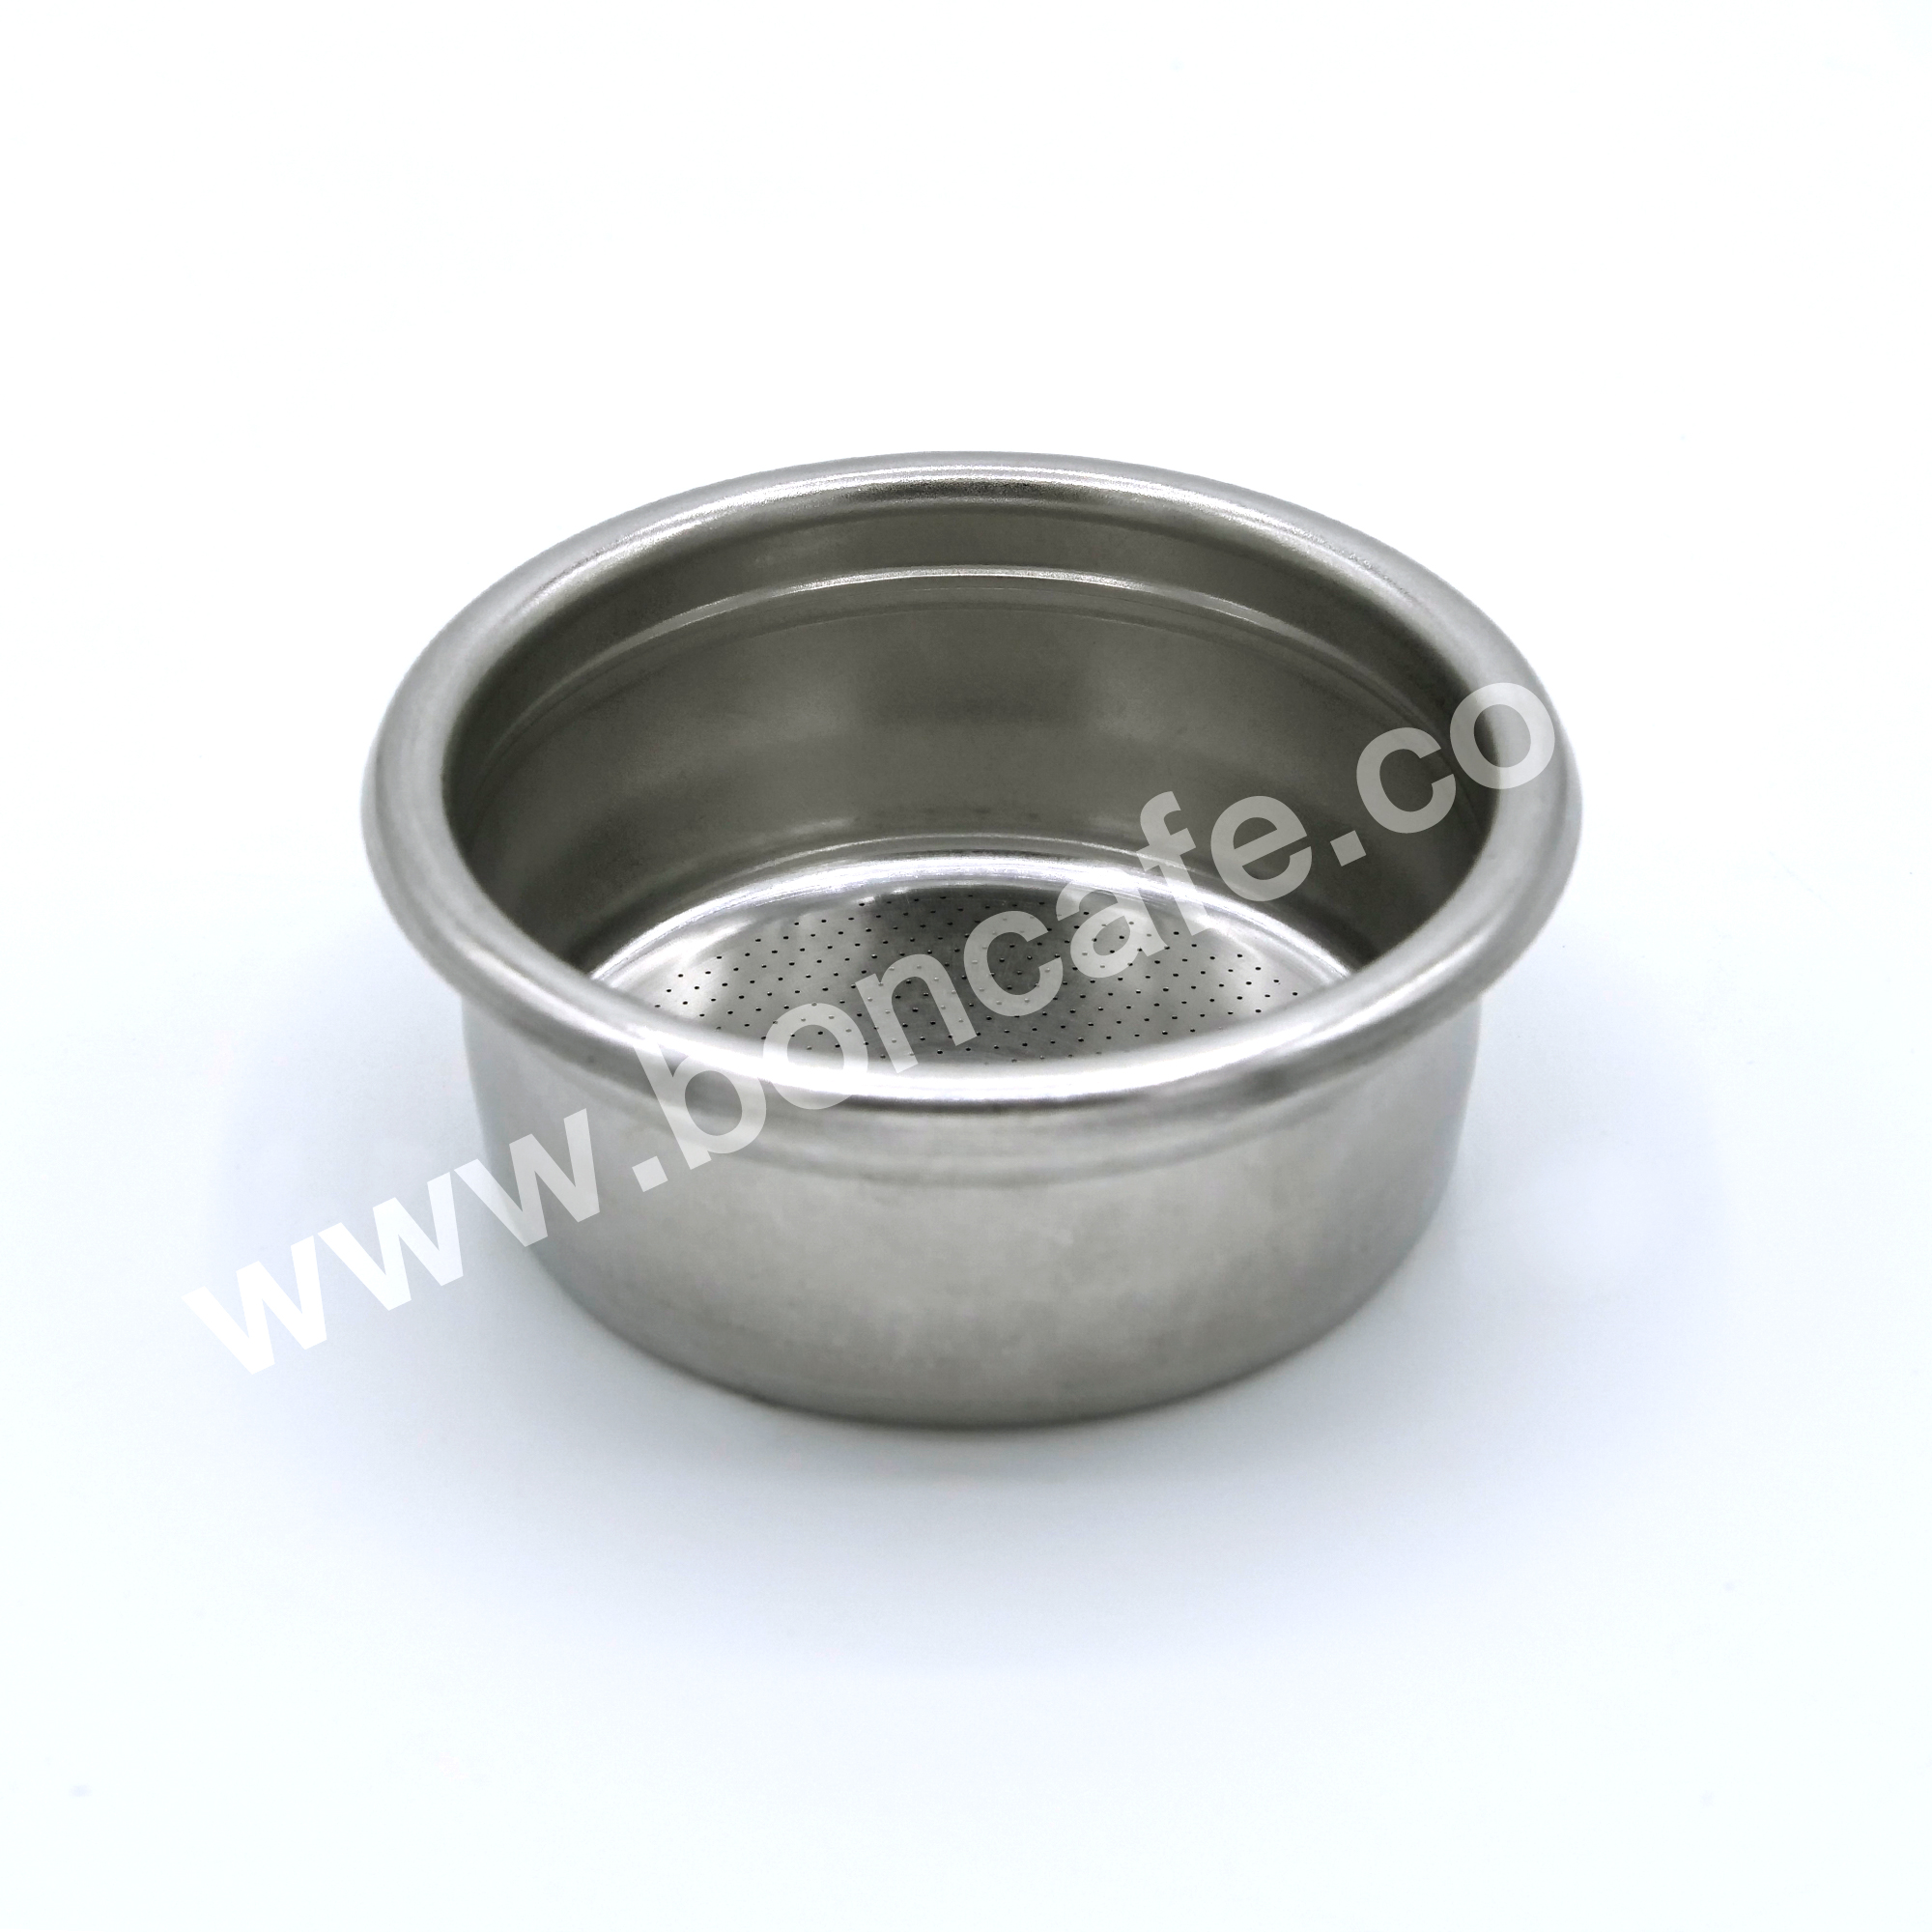 2.-WegaPegaso-3-cups-stainless-steel-filter-30428